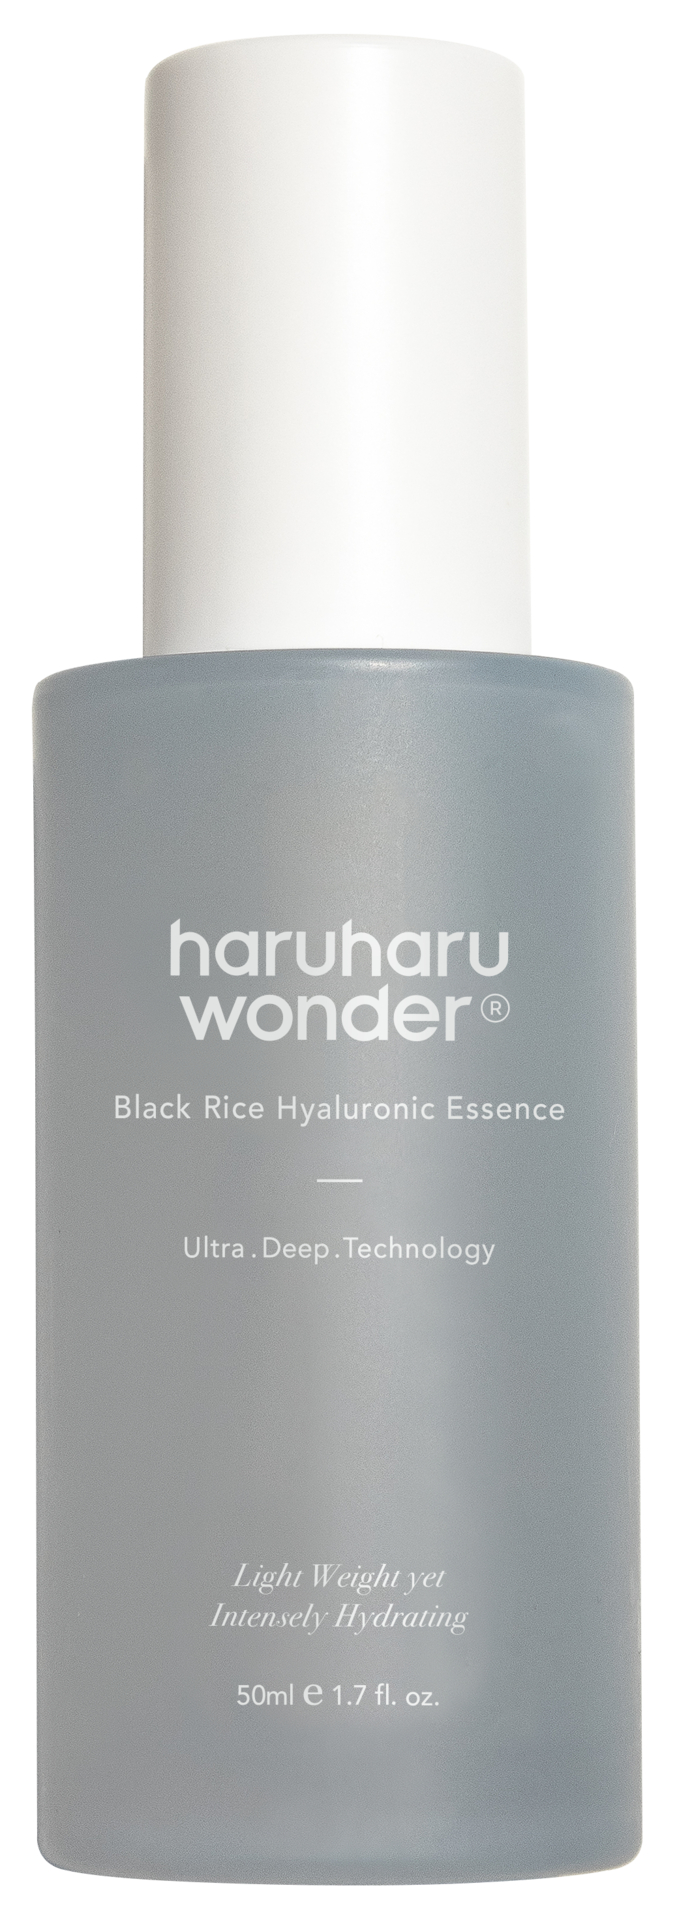 Haruharu Wonder Black Rice Hyaluronic Essence 50ml